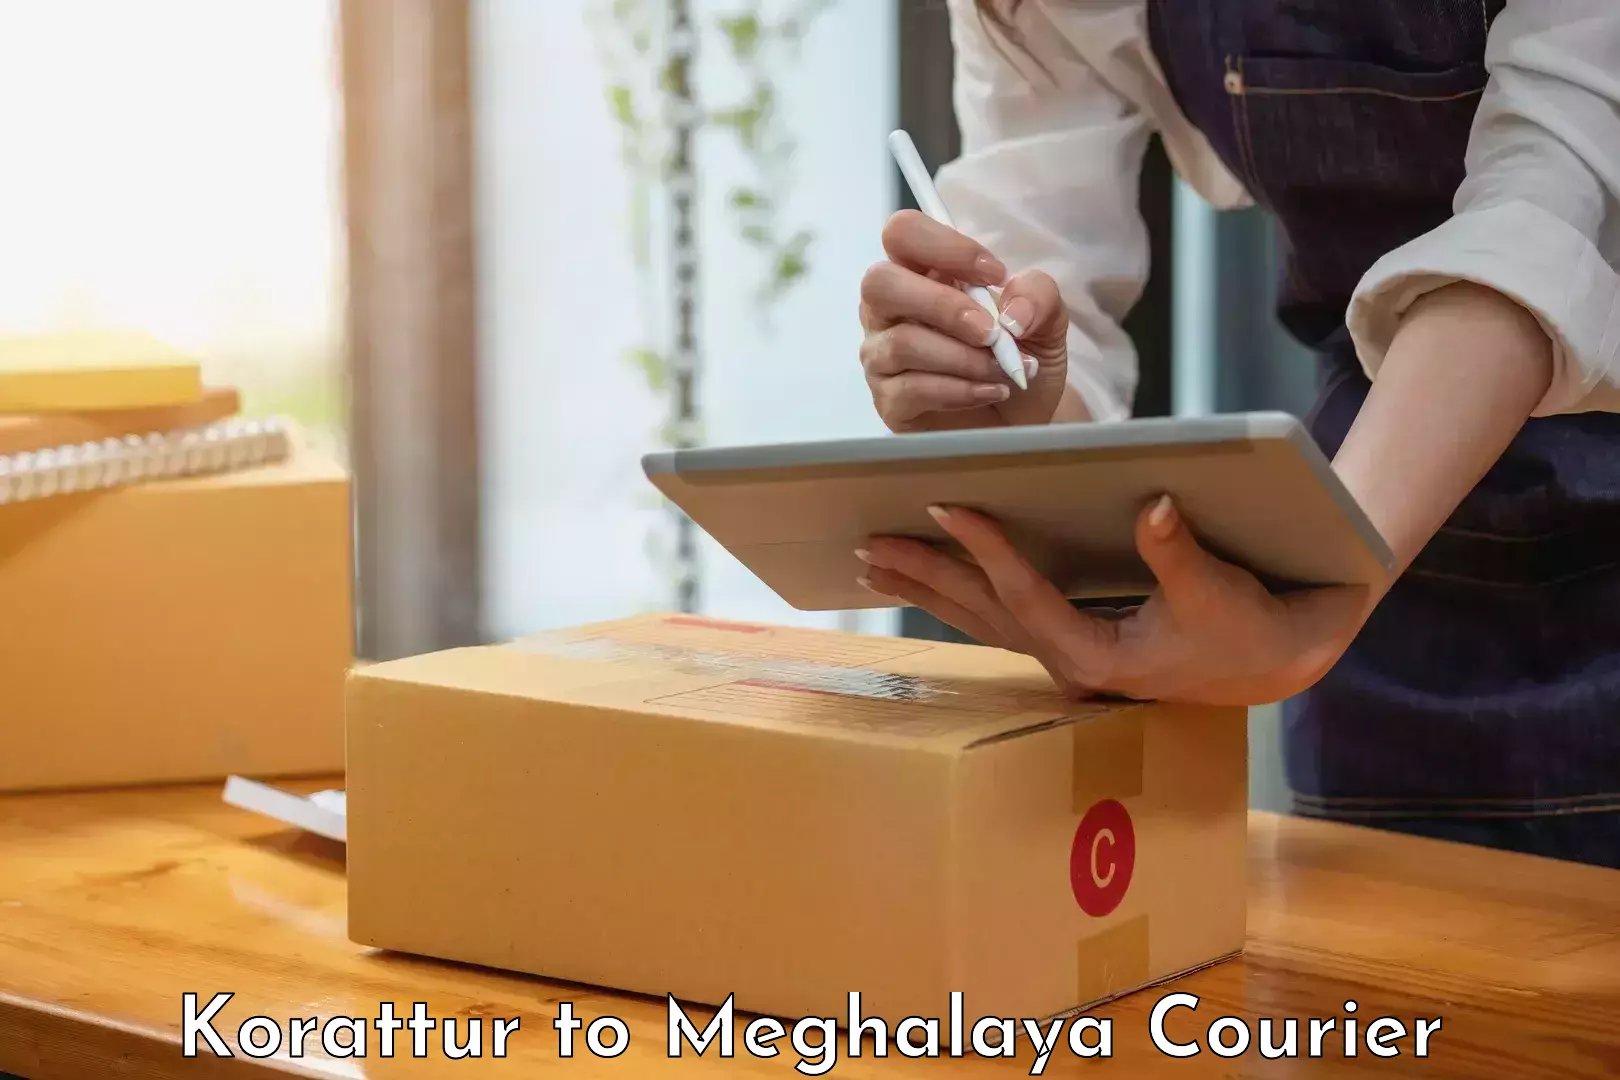 International courier networks Korattur to Meghalaya